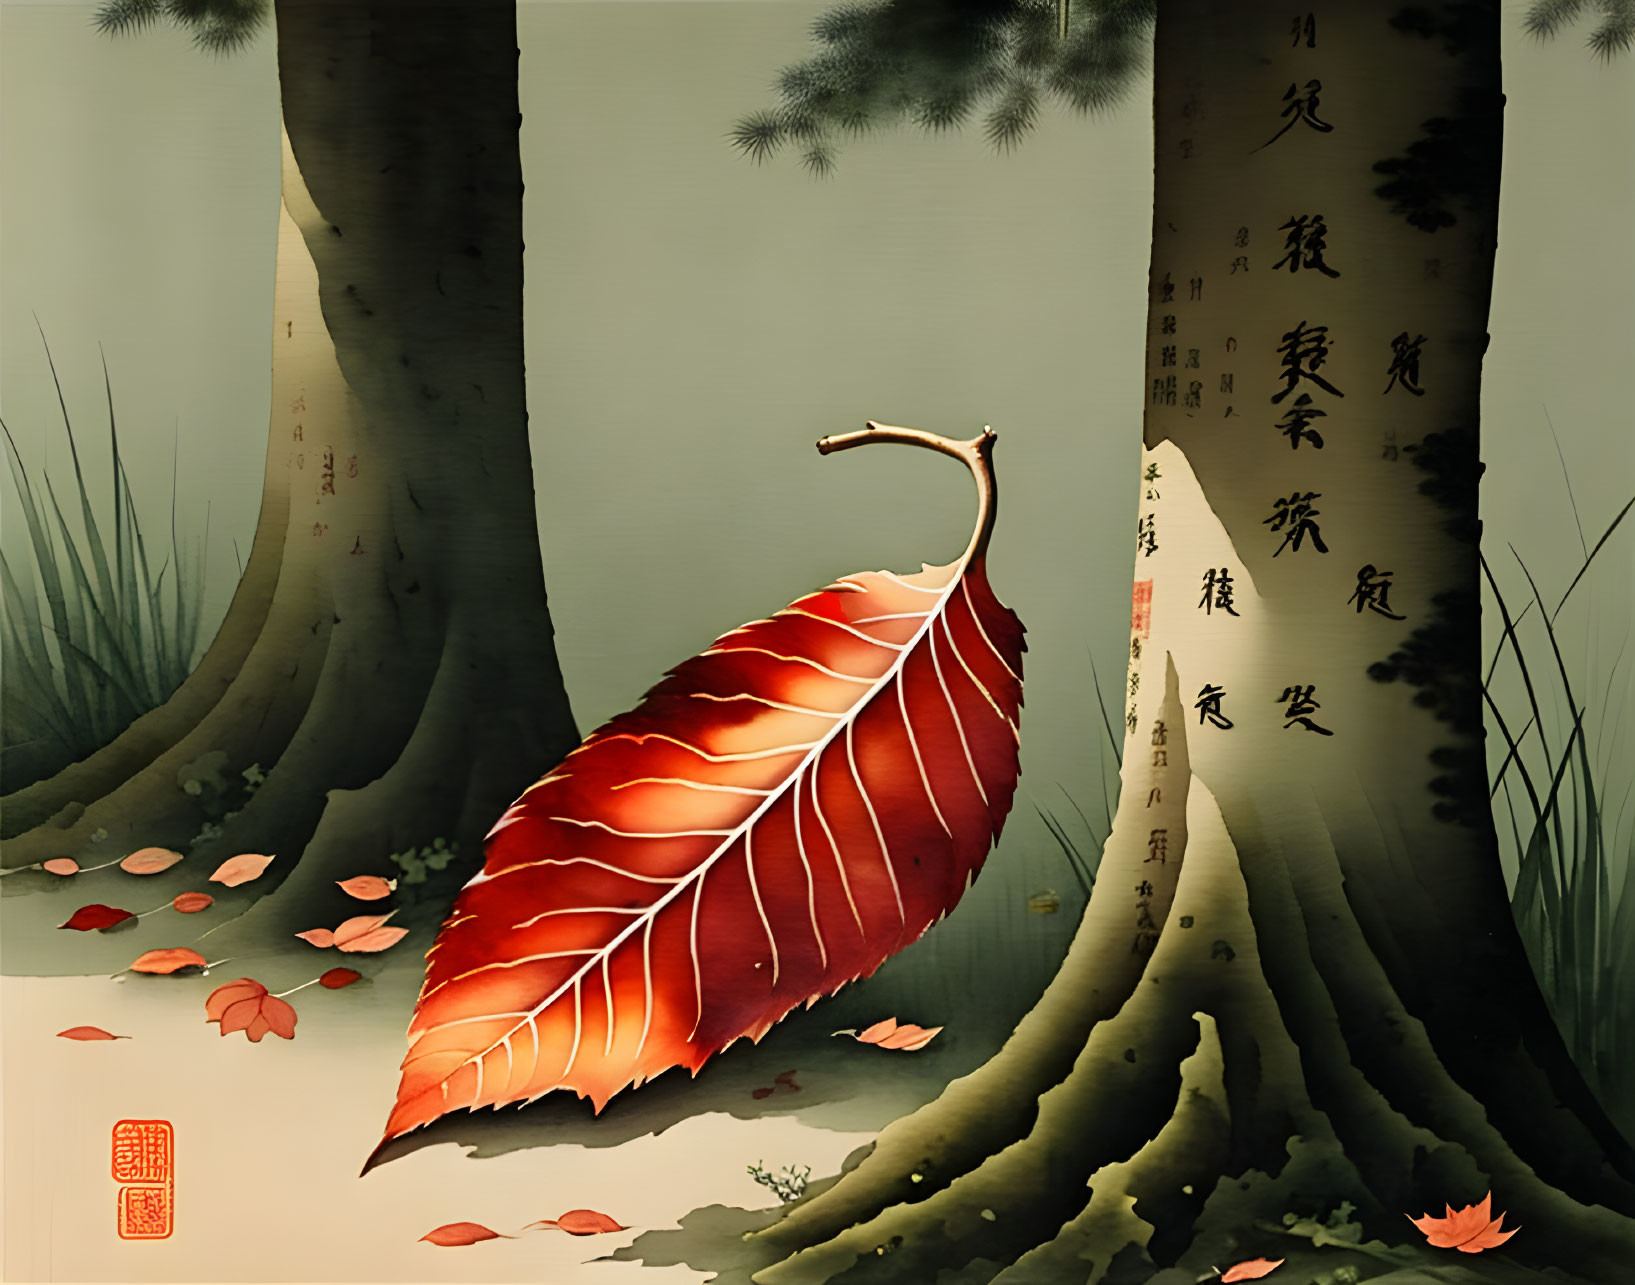 Illustrated scene: Large red leaf, smaller leaves, serene tree trunks, Asian calligraphy